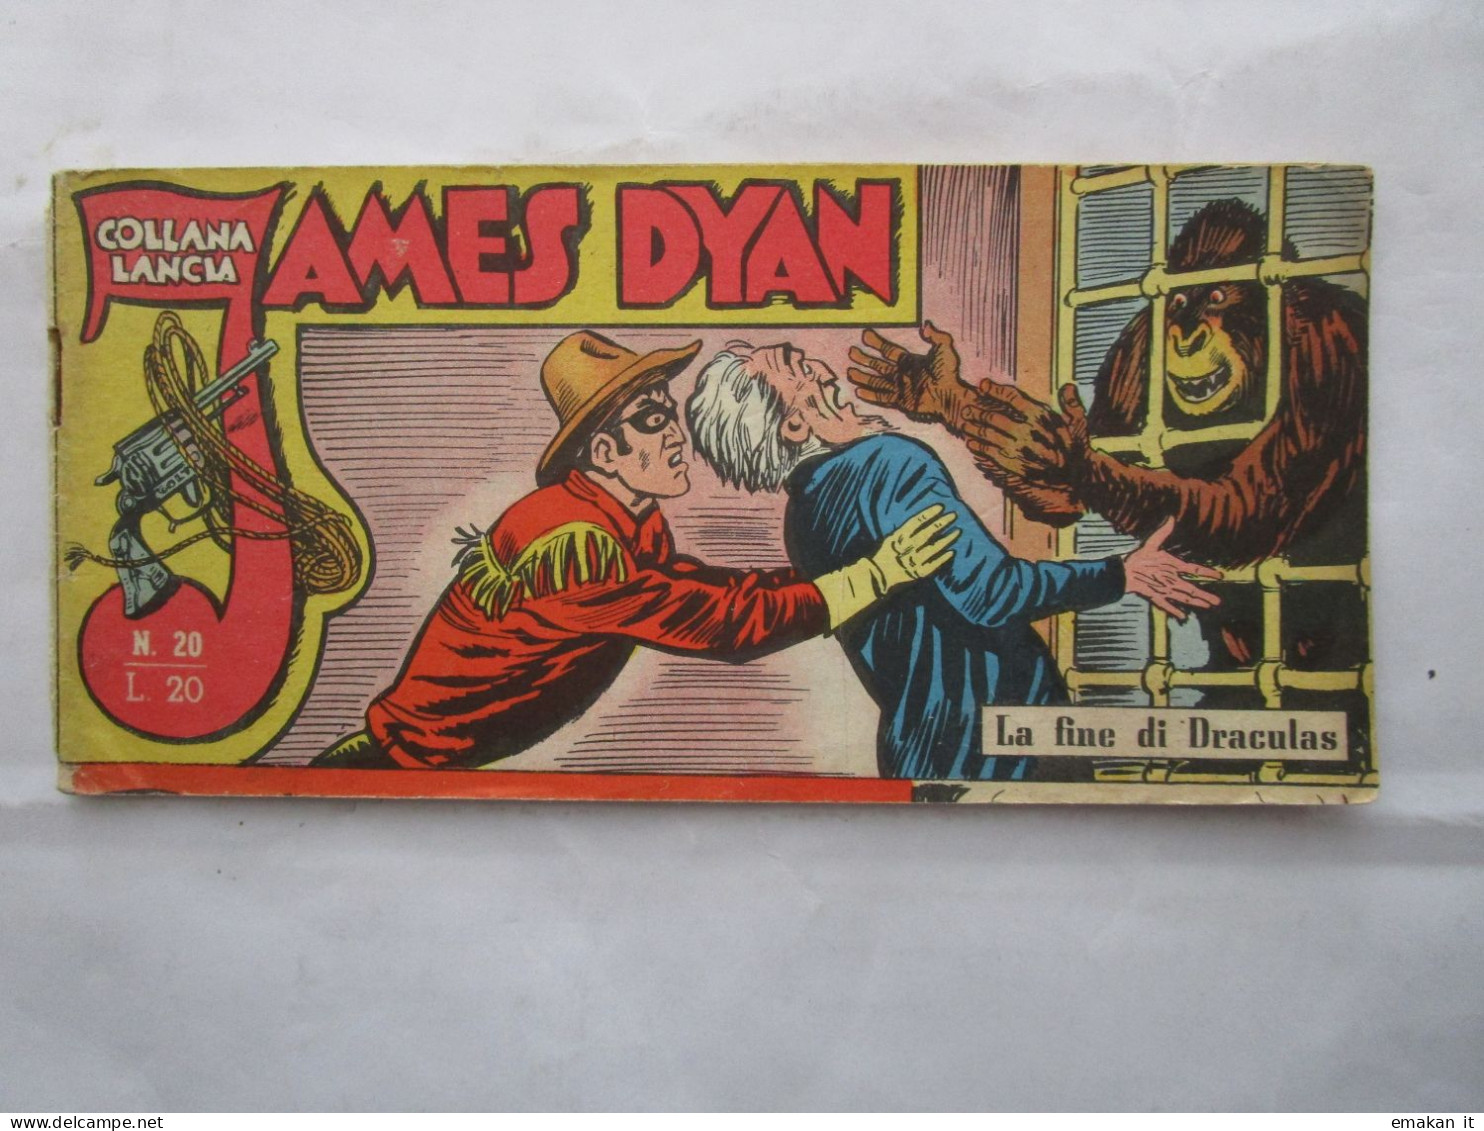 # JAMES DYAN  N 20 / 1960 COLLANA LANCIA  ED. DARDO - Premières éditions